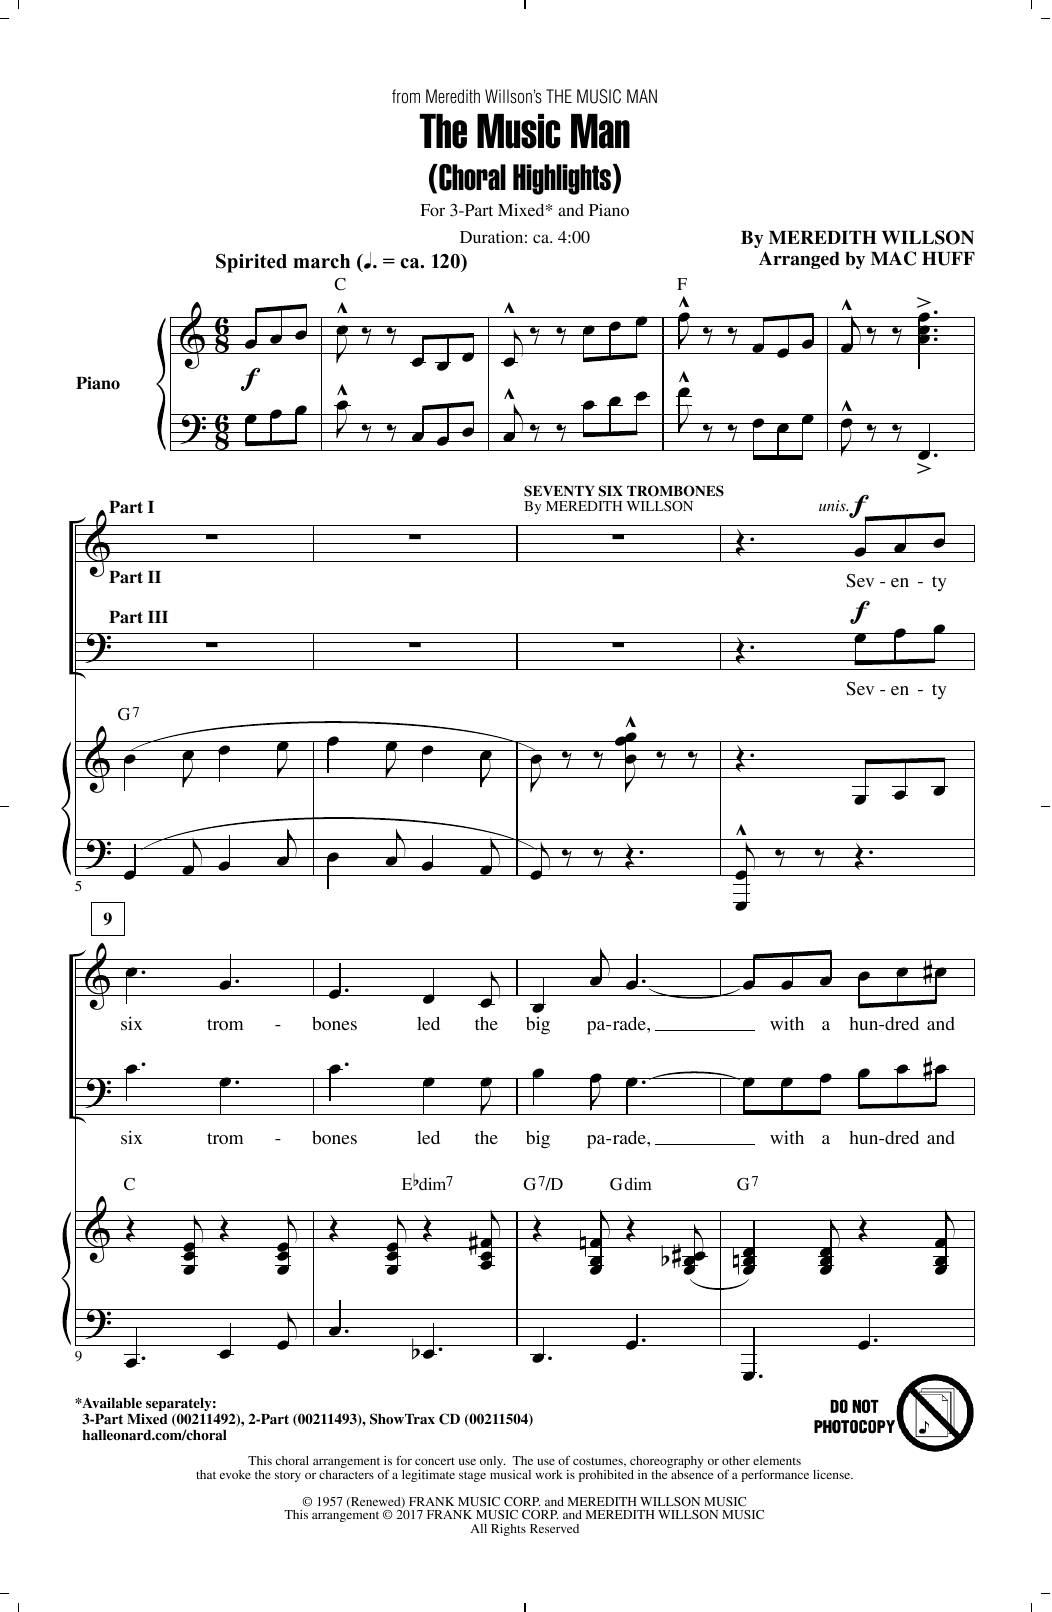 Mac Huff The Music Man (Choral Highlights) Sheet Music Notes & Chords for 2-Part Choir - Download or Print PDF